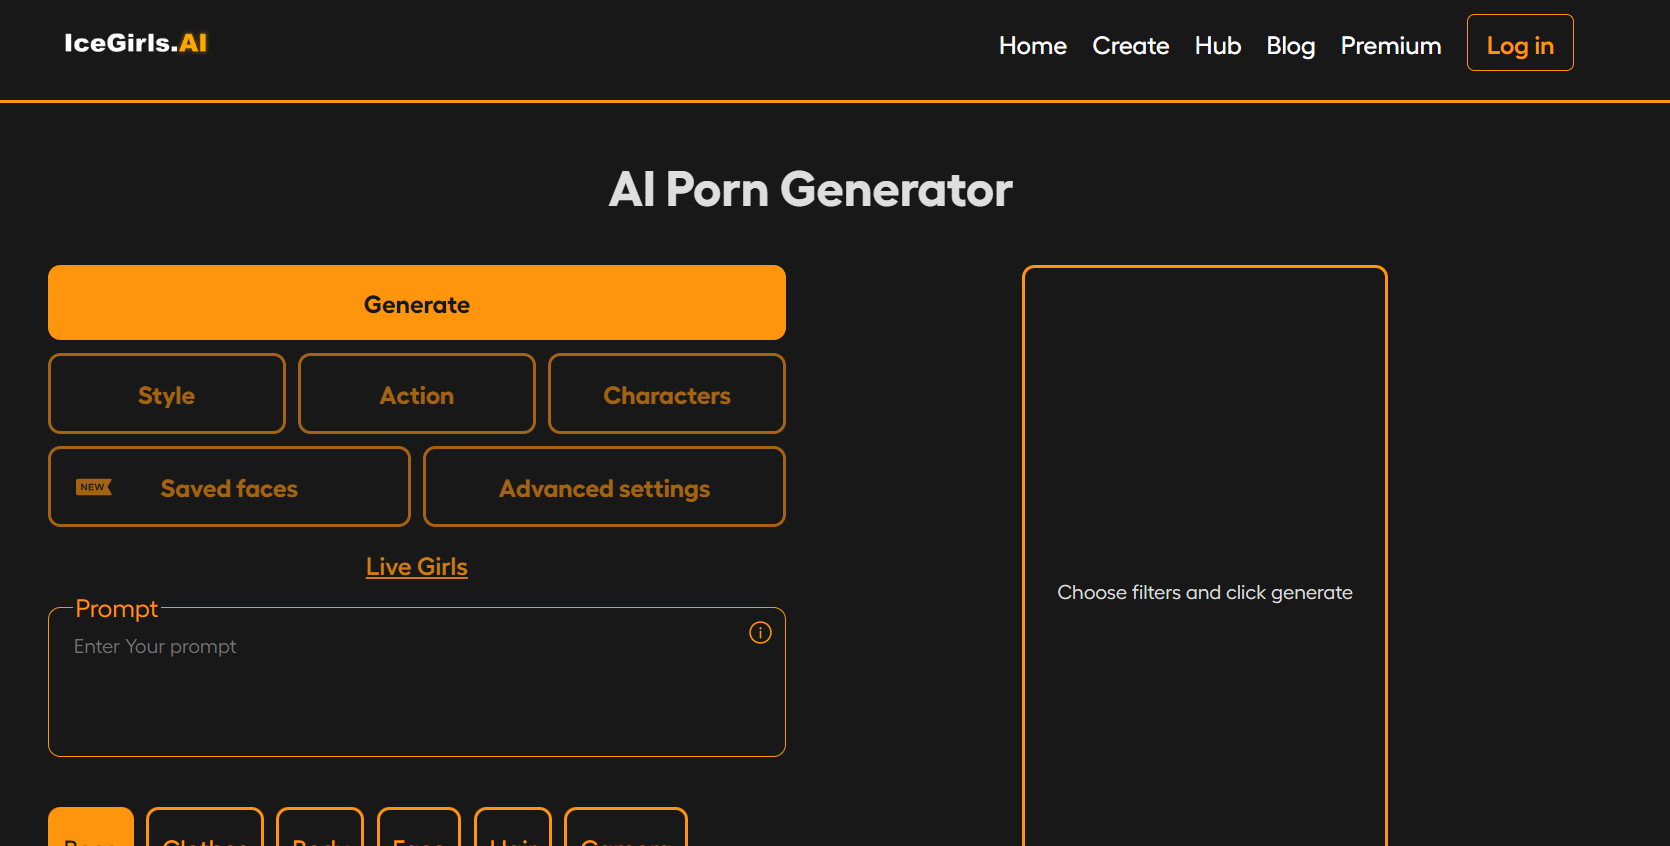 IceGirls AI Porn Generator